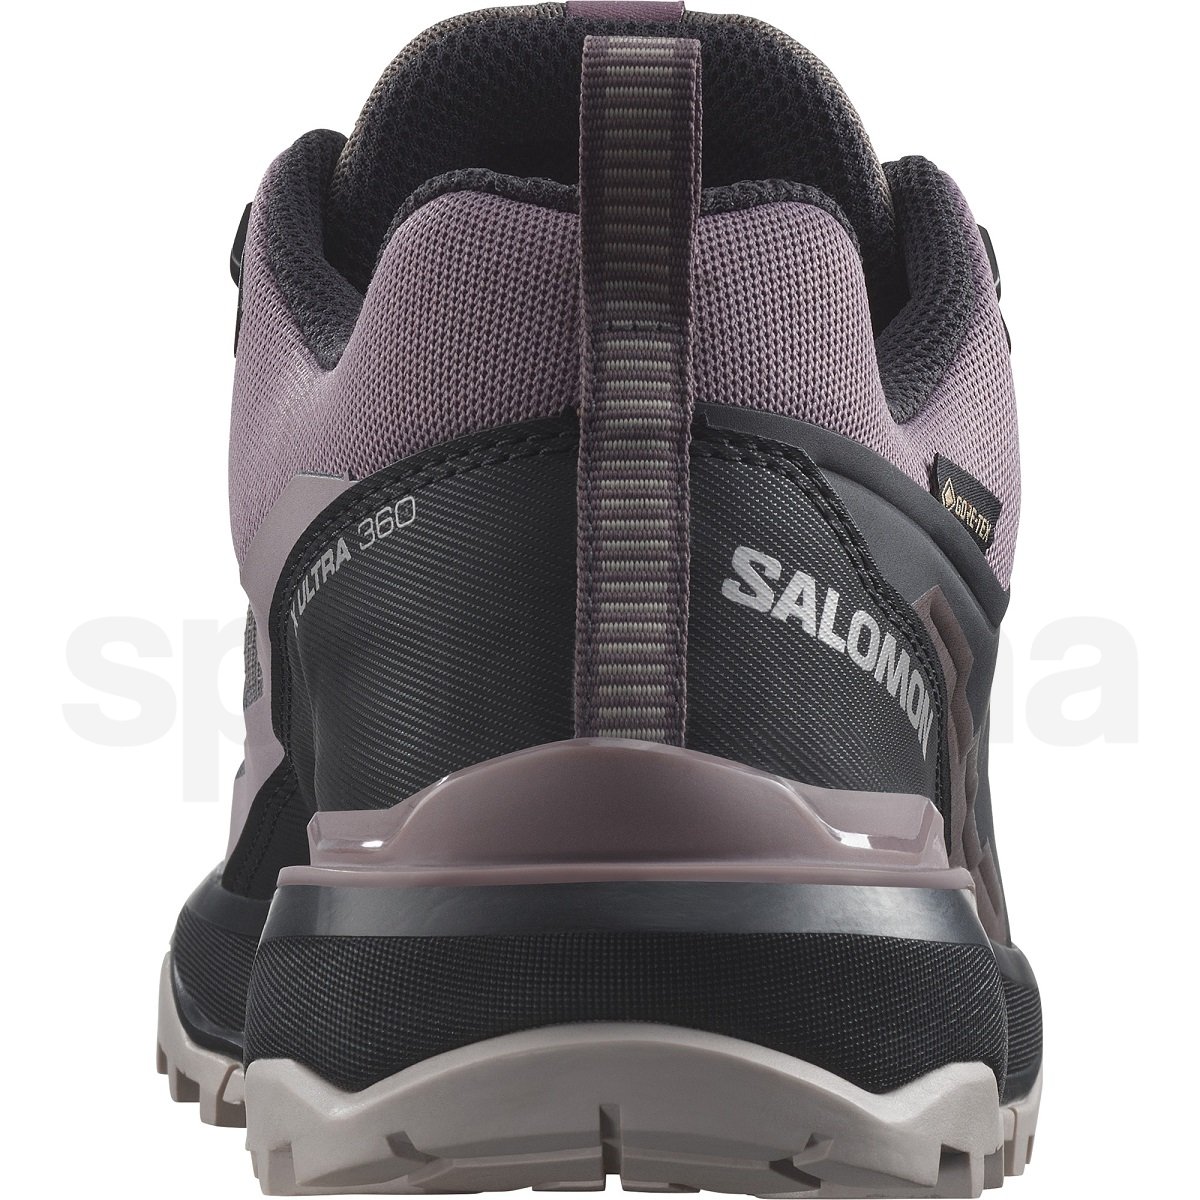 Obuv Salomon X Ultra 360 GTX W - šedá/fialová